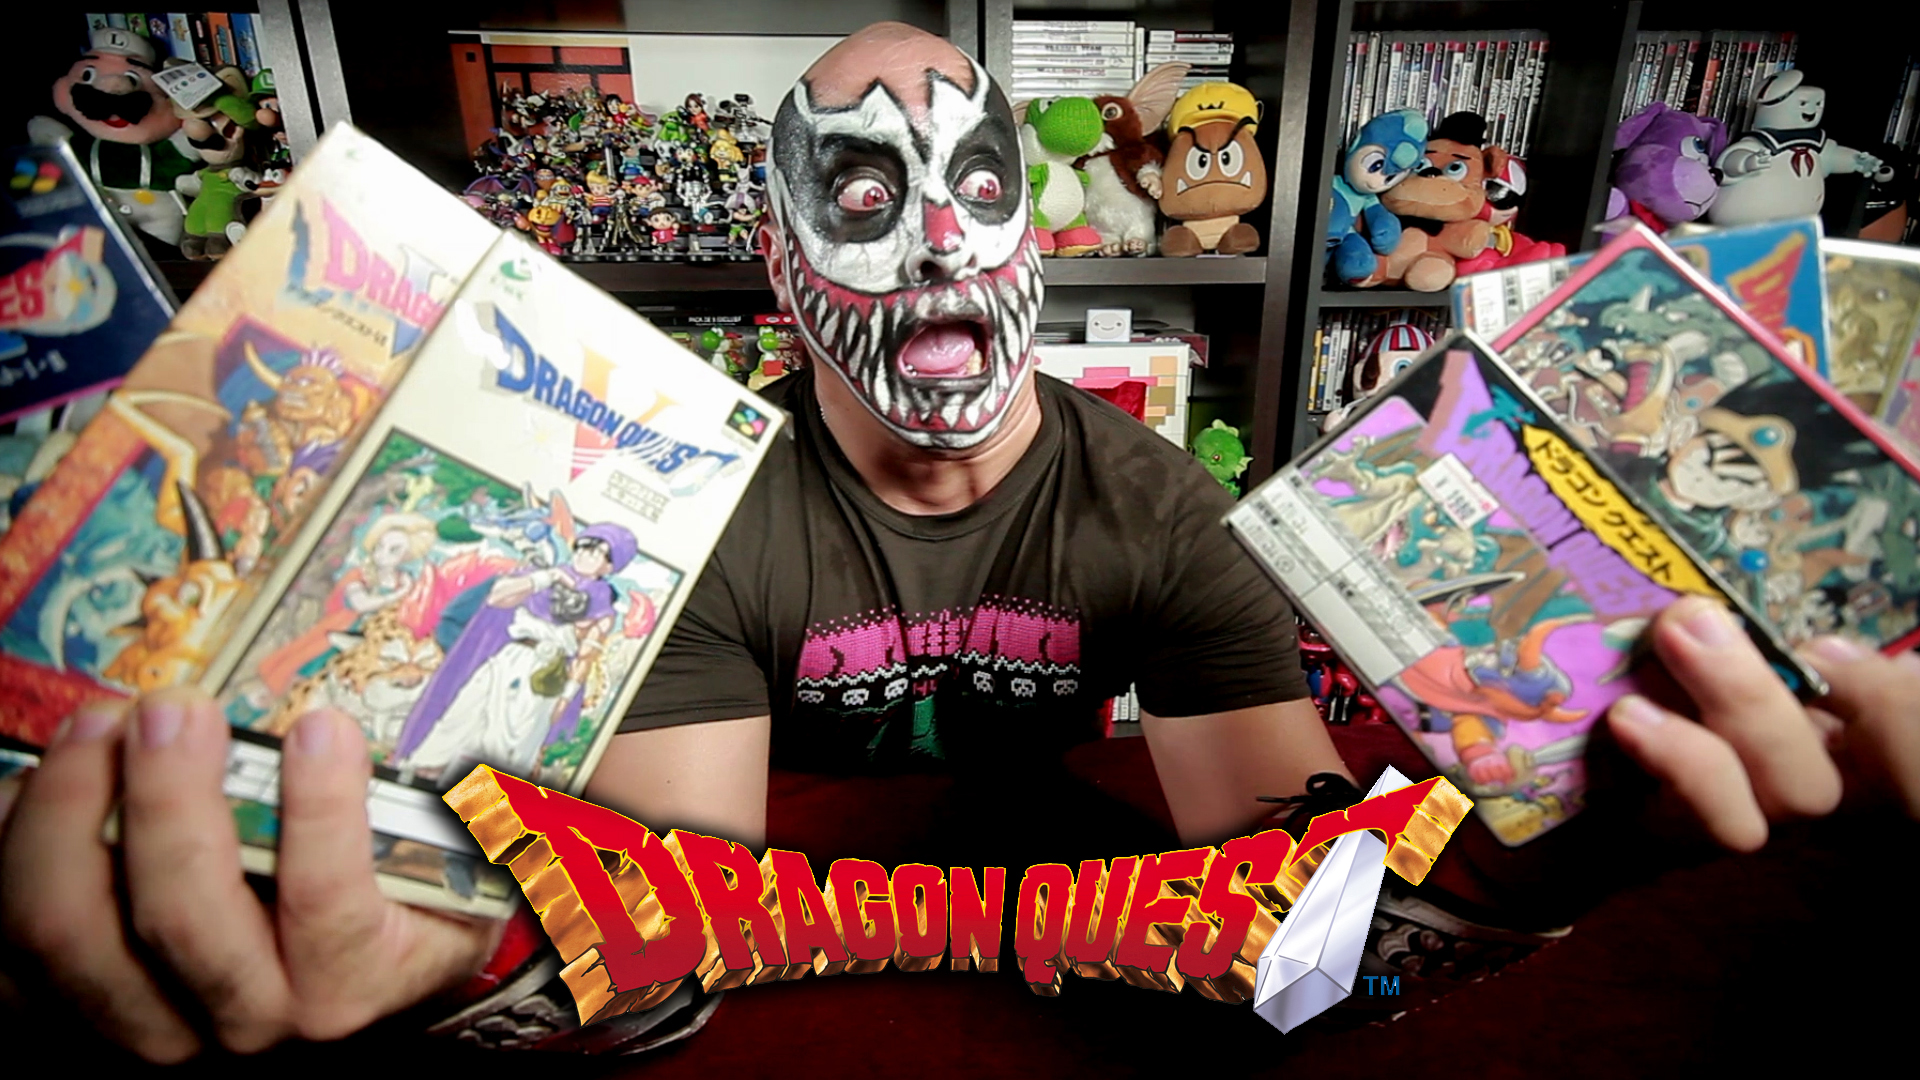 Giant Famicom Dragon quest pickups thanks to KIDSHORYUKEN